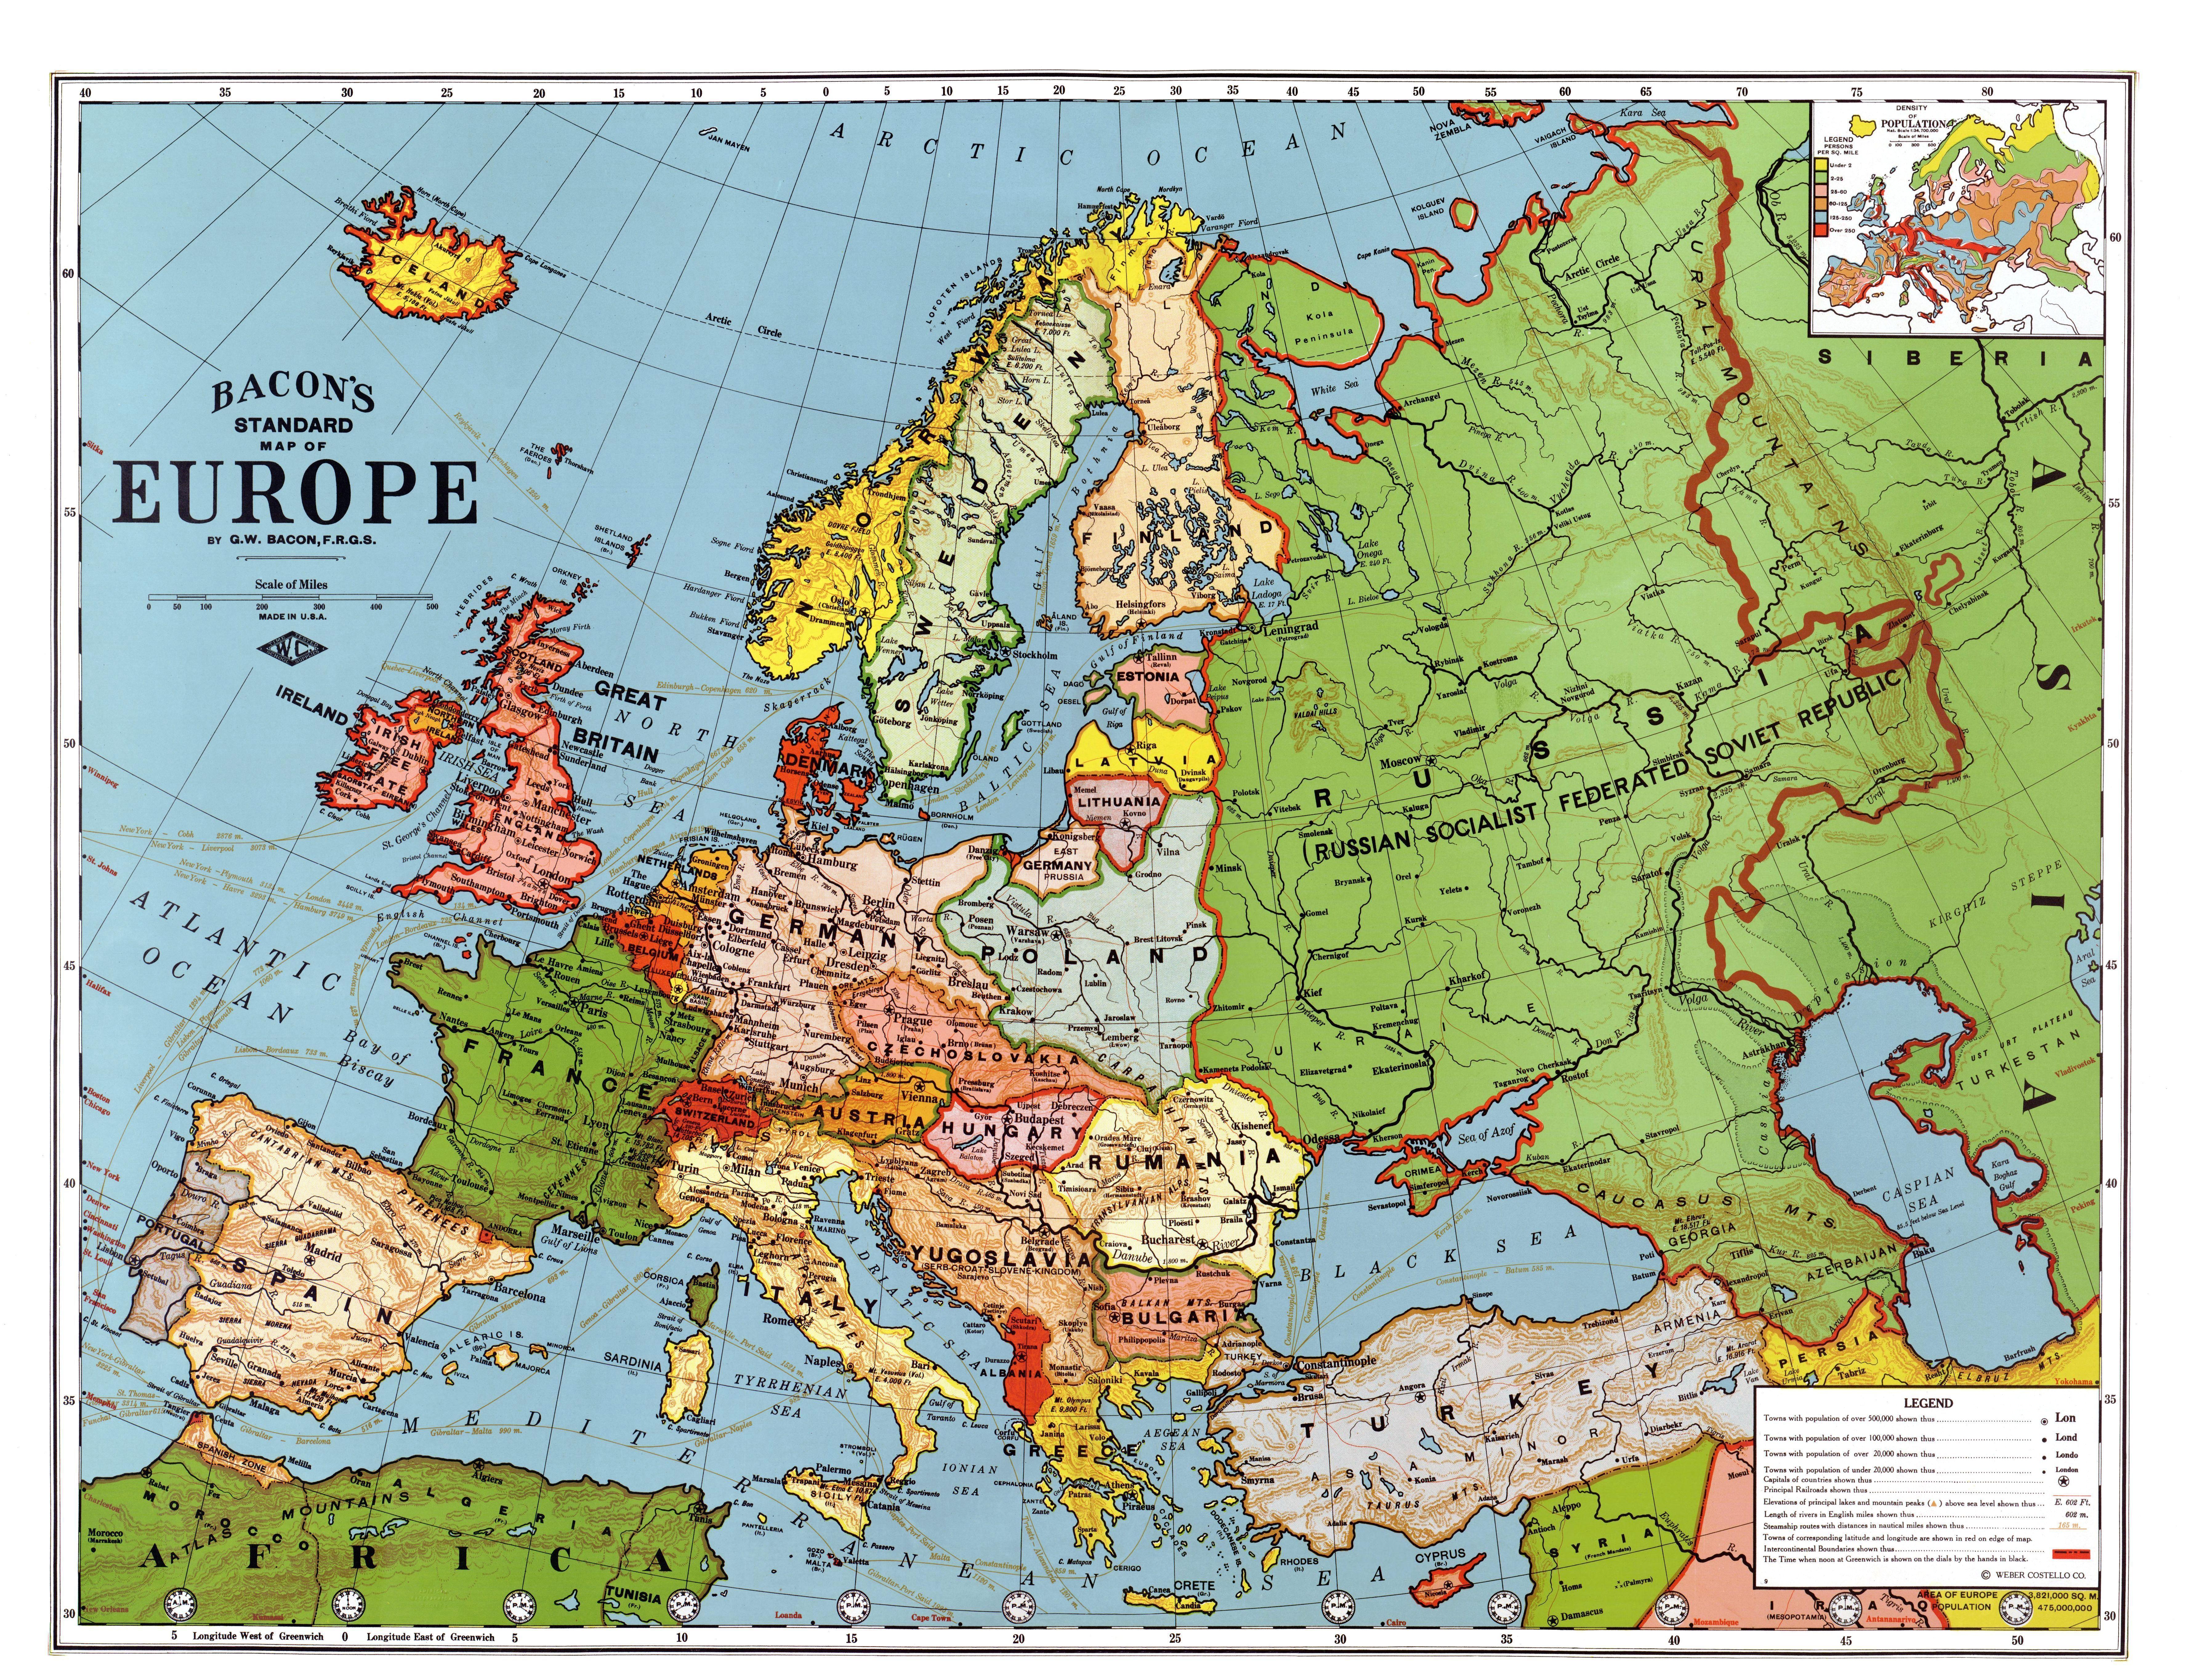 Europe during the interwar period (1923) [7097 x 5456]